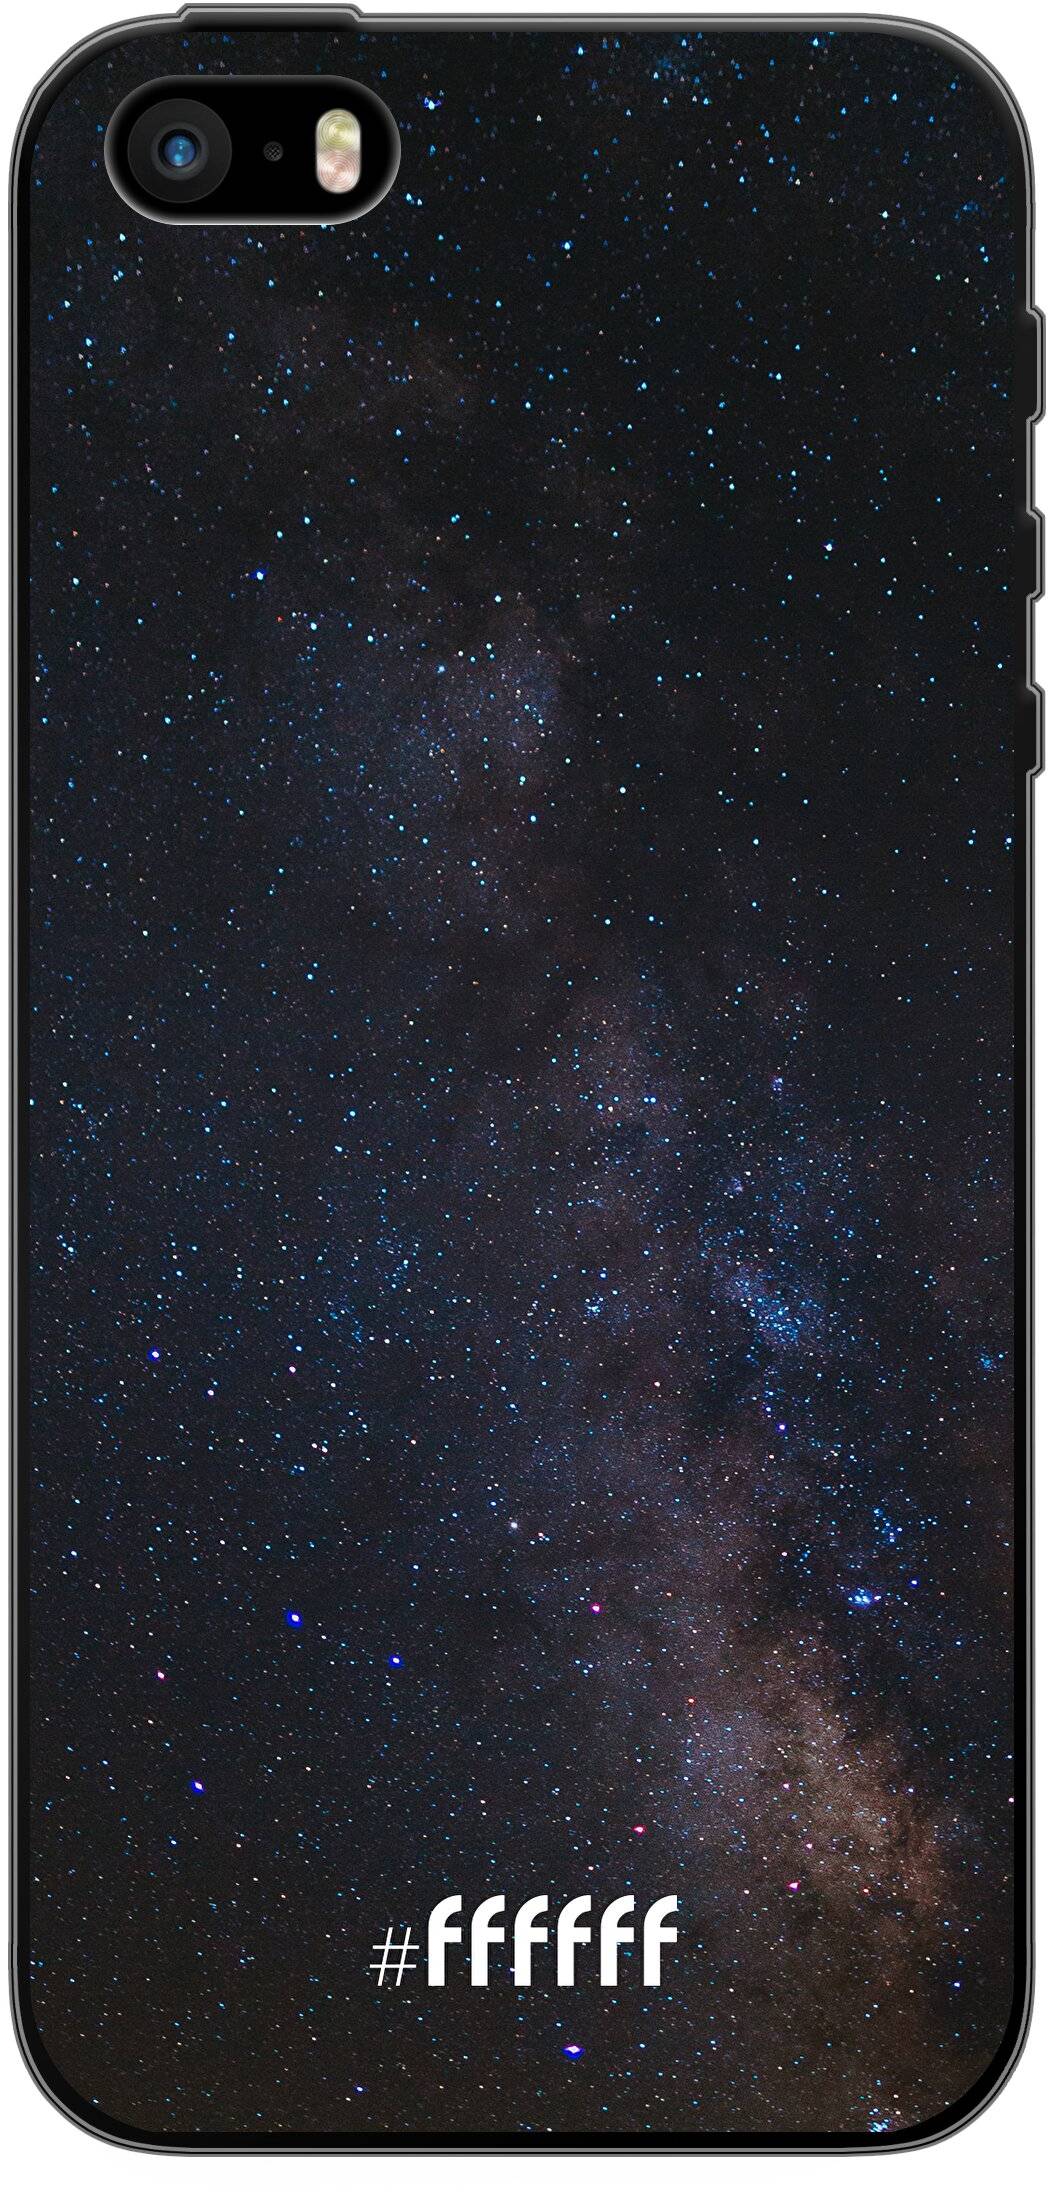 Dark Space iPhone 5s